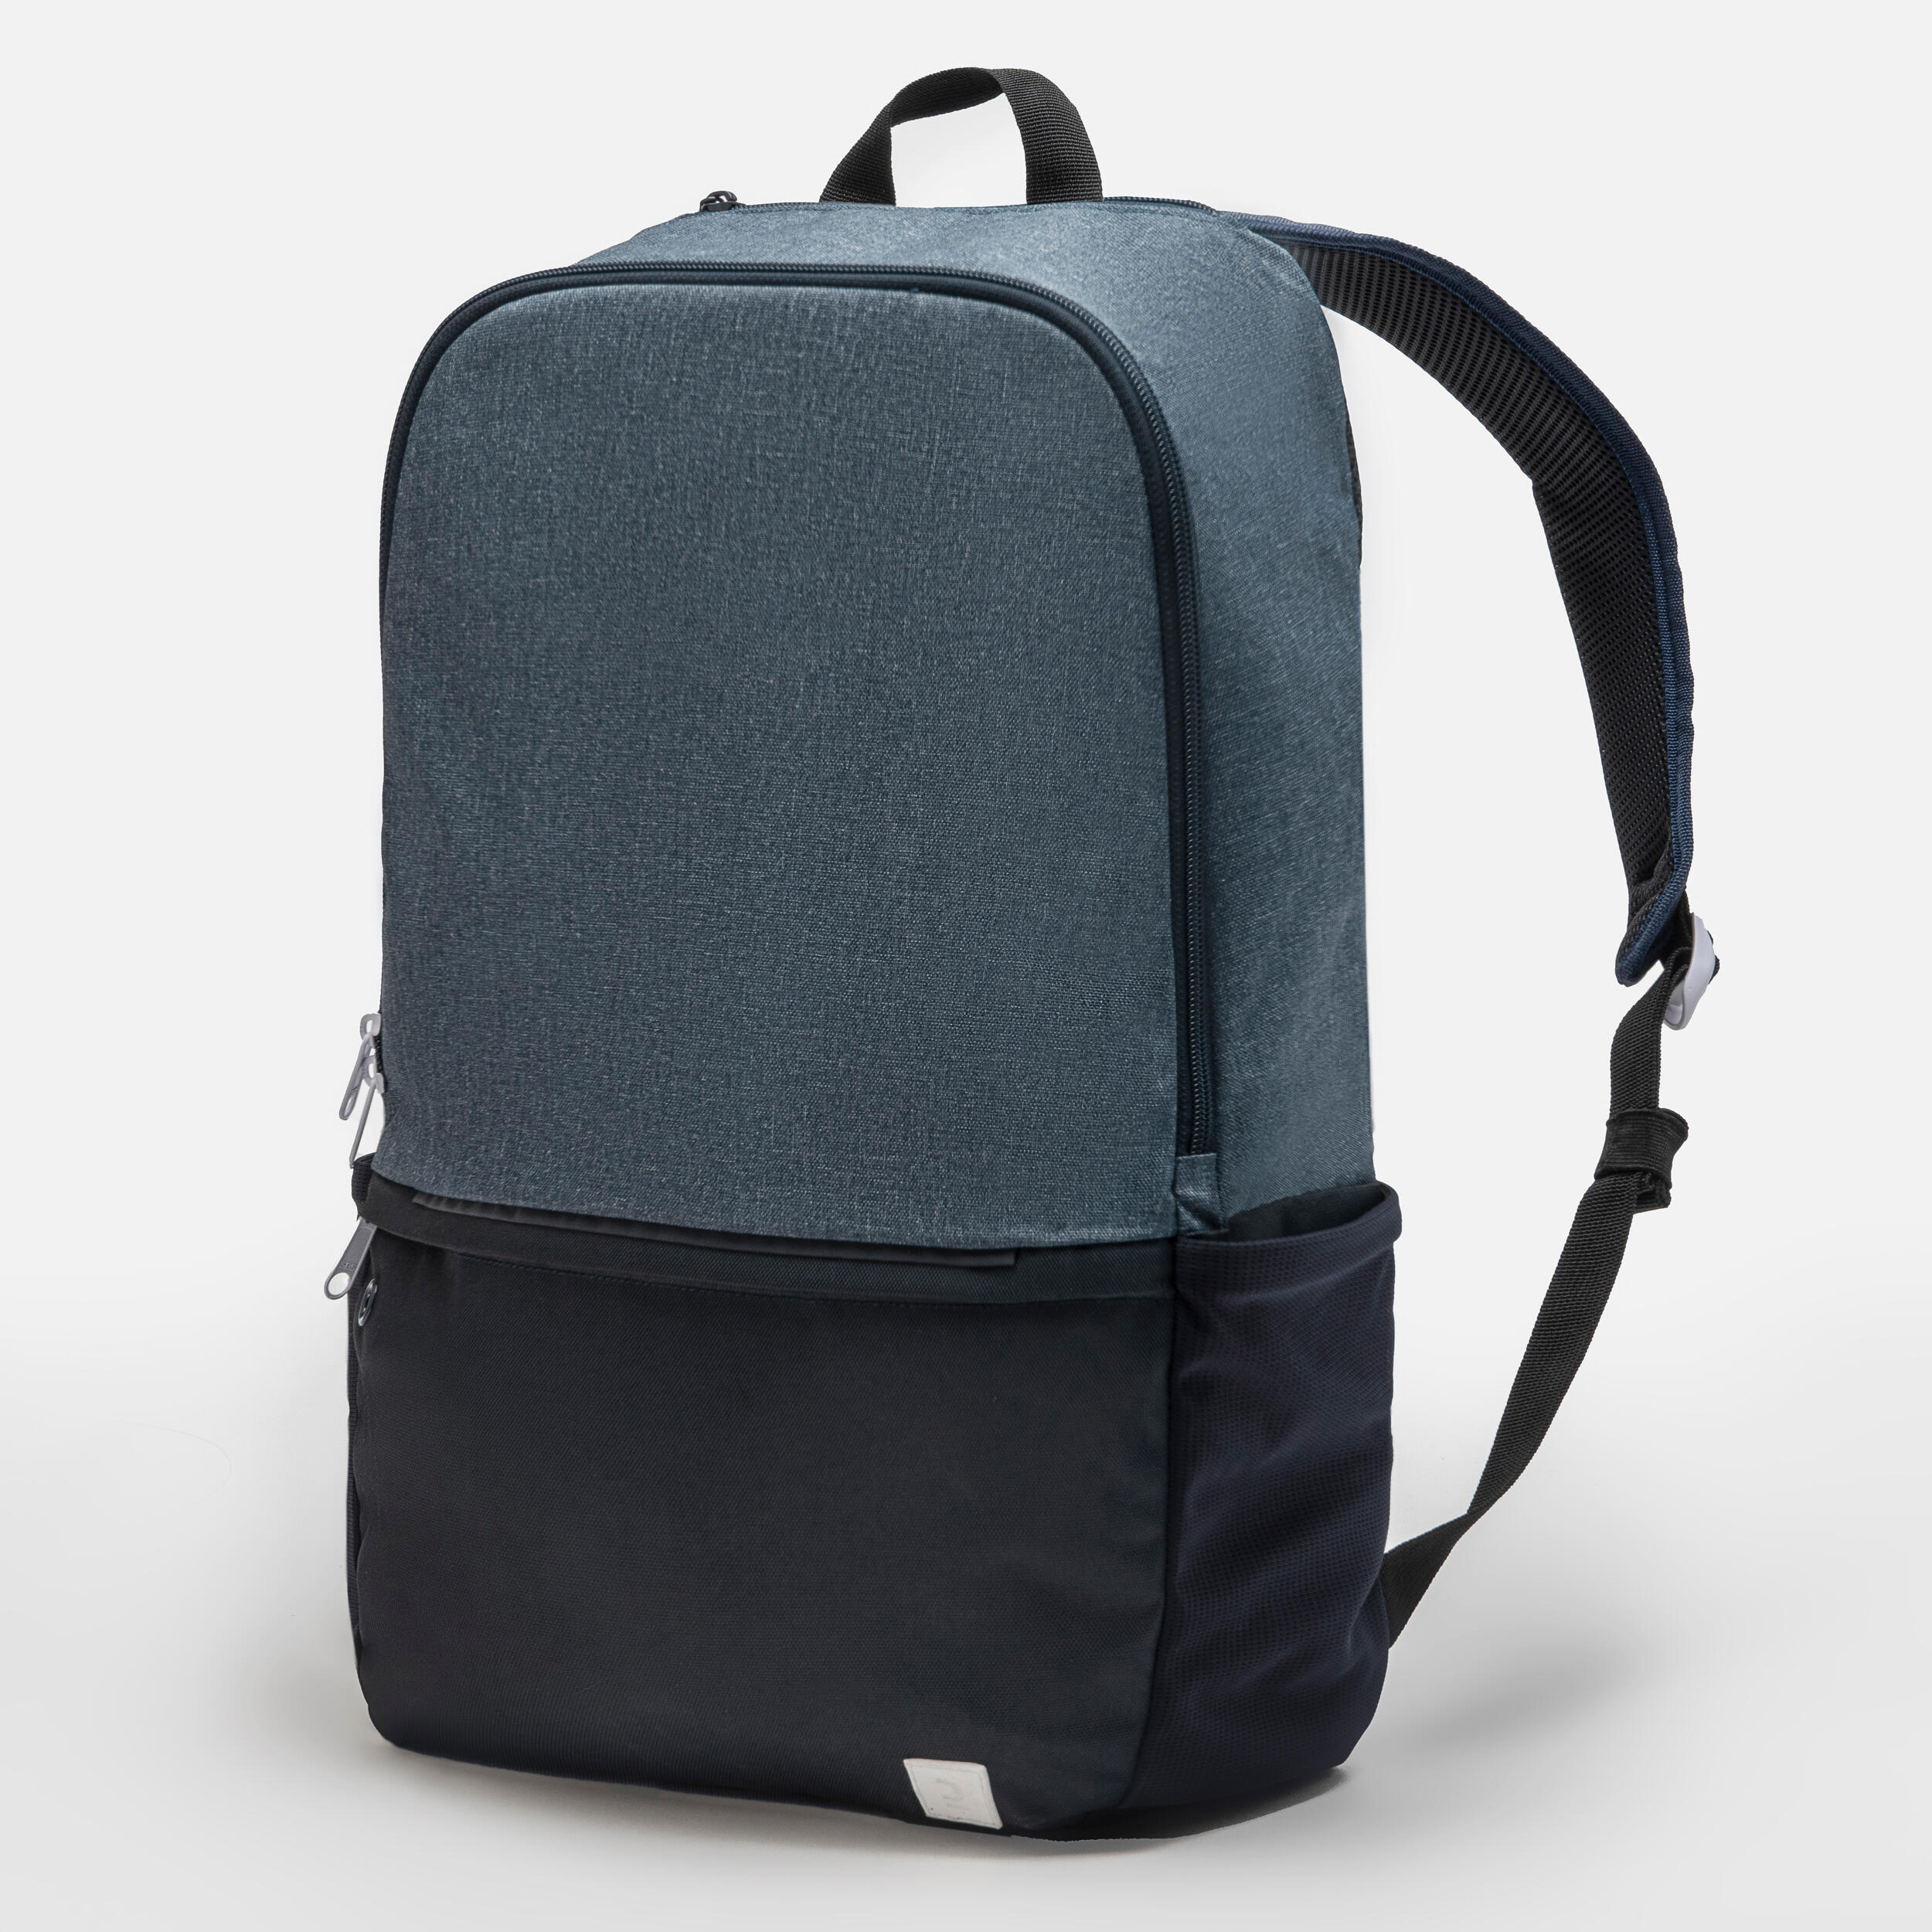 24 L Backpack Essential - Blue 4/7